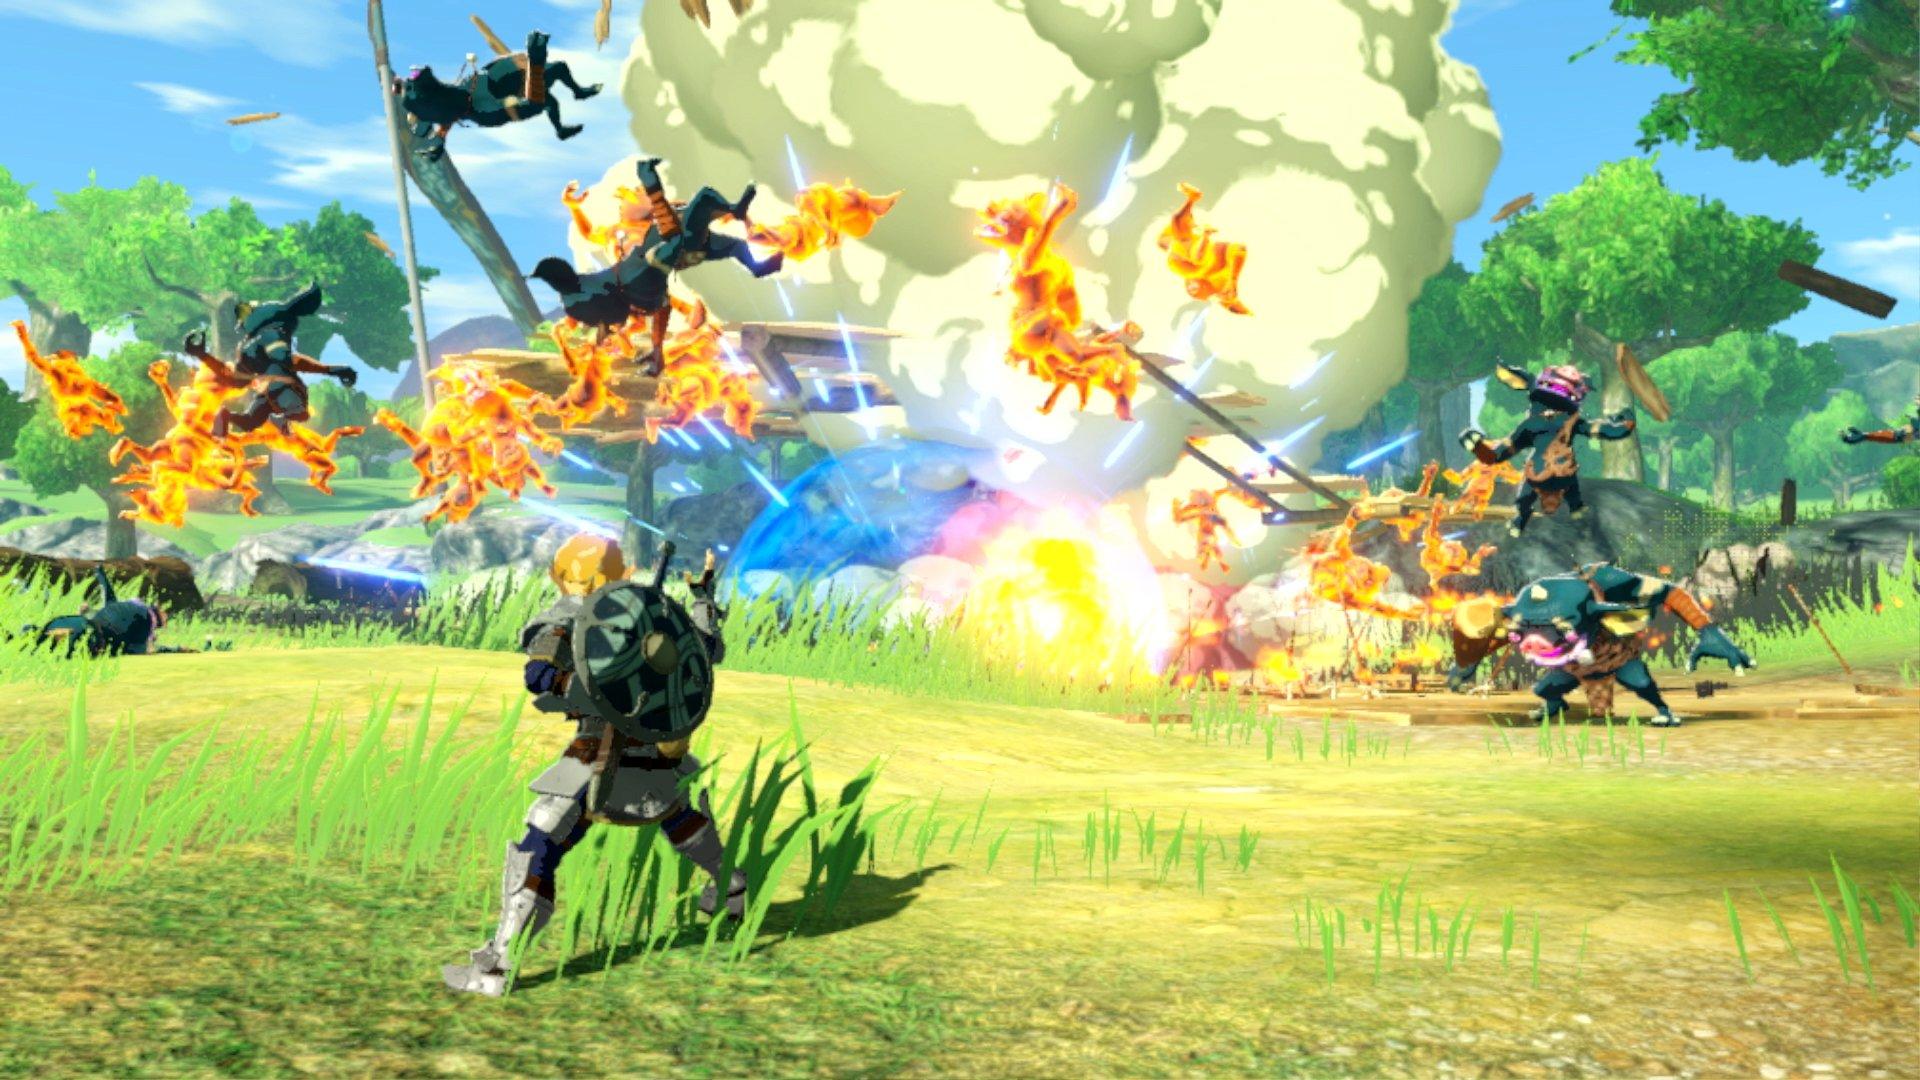 Hyrule Warriors Averages 74 On Metacritic - My Nintendo News